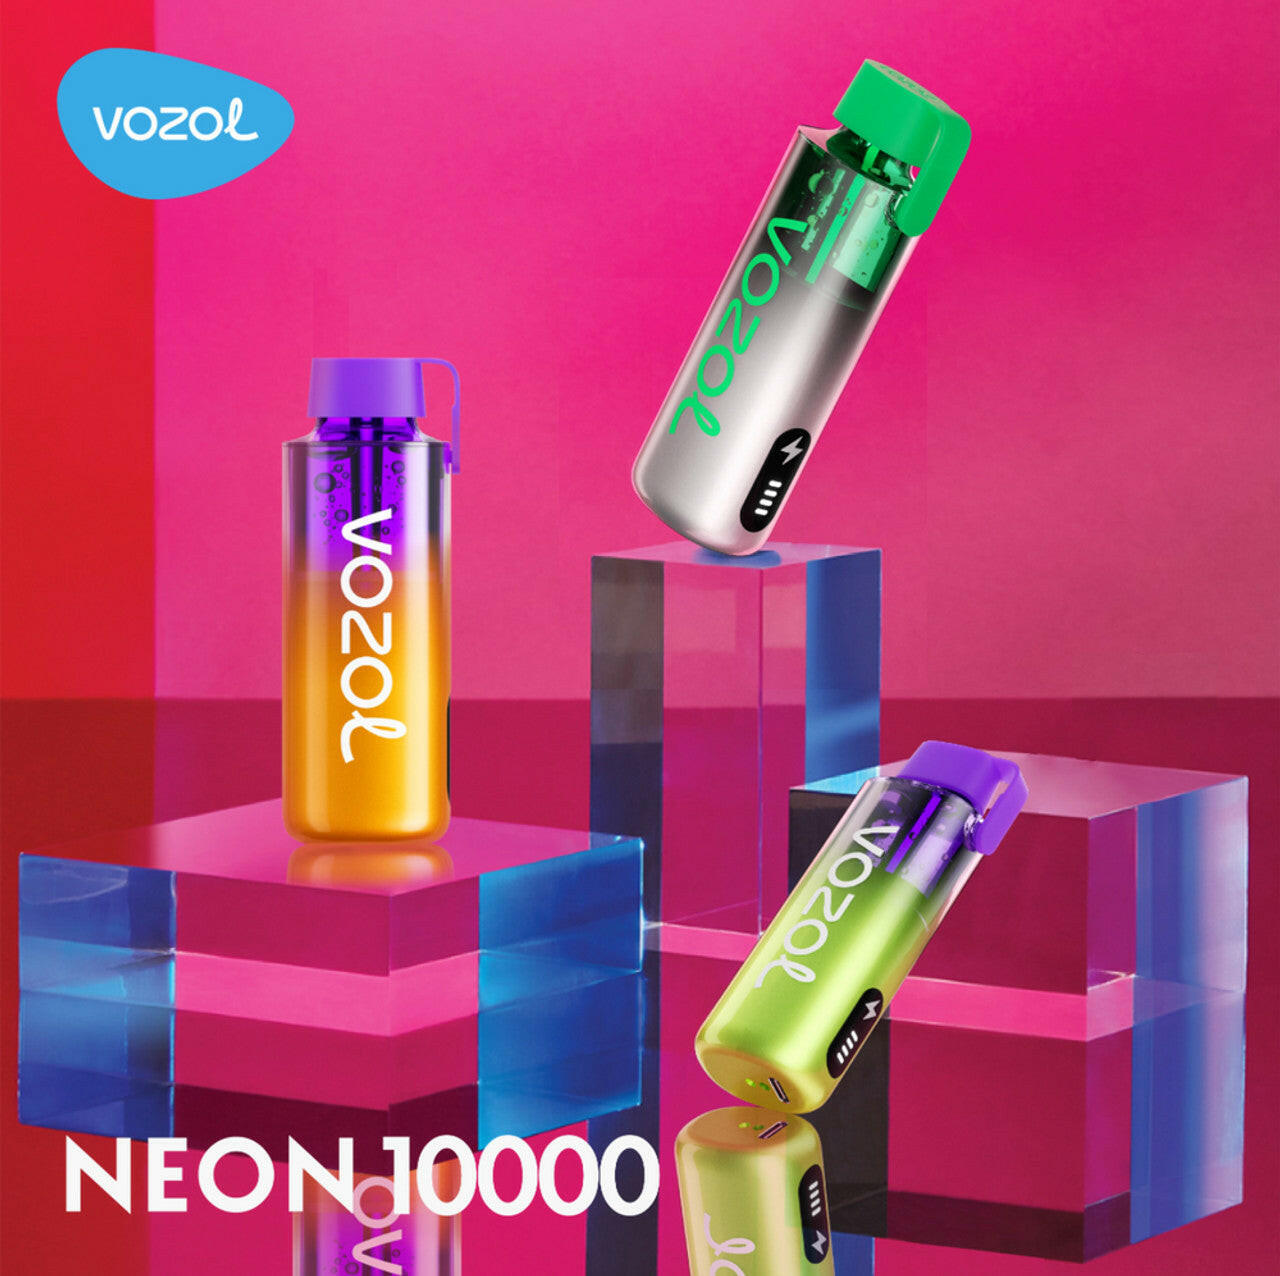 Vozol Neon 10 000.